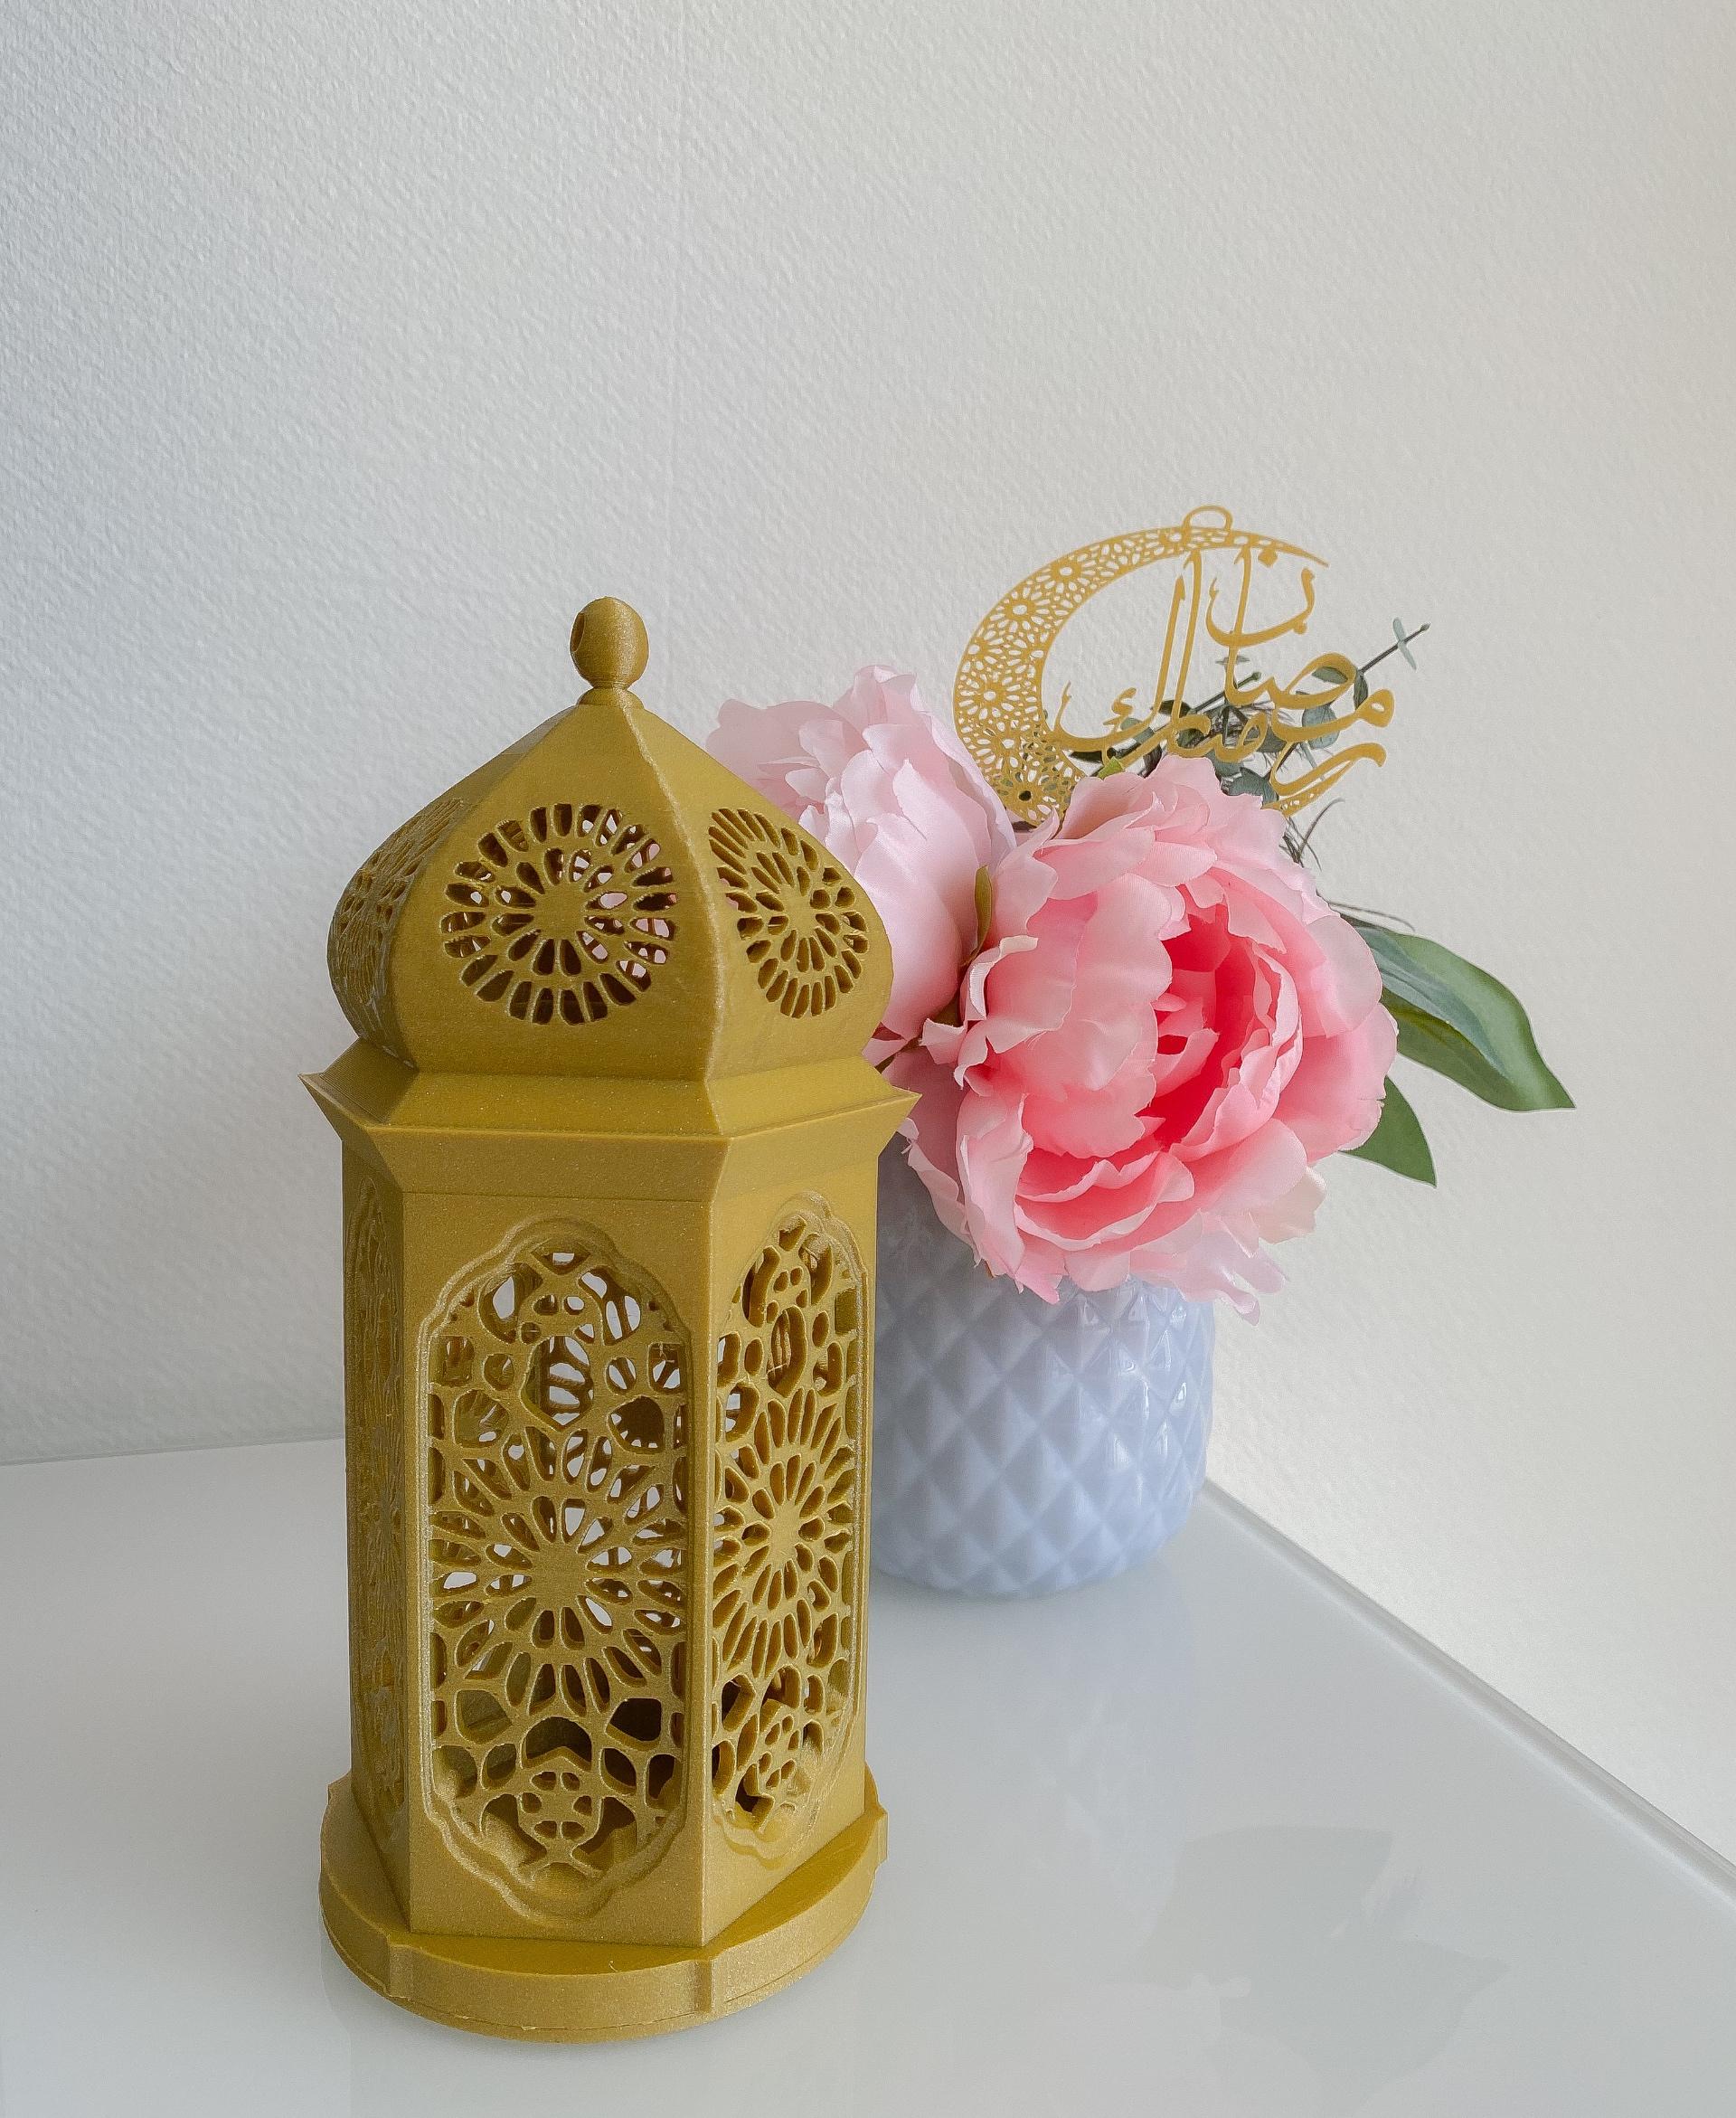 Arabic Style Lantern - Eid Mubarak!
Fillamentum filament - 3d model